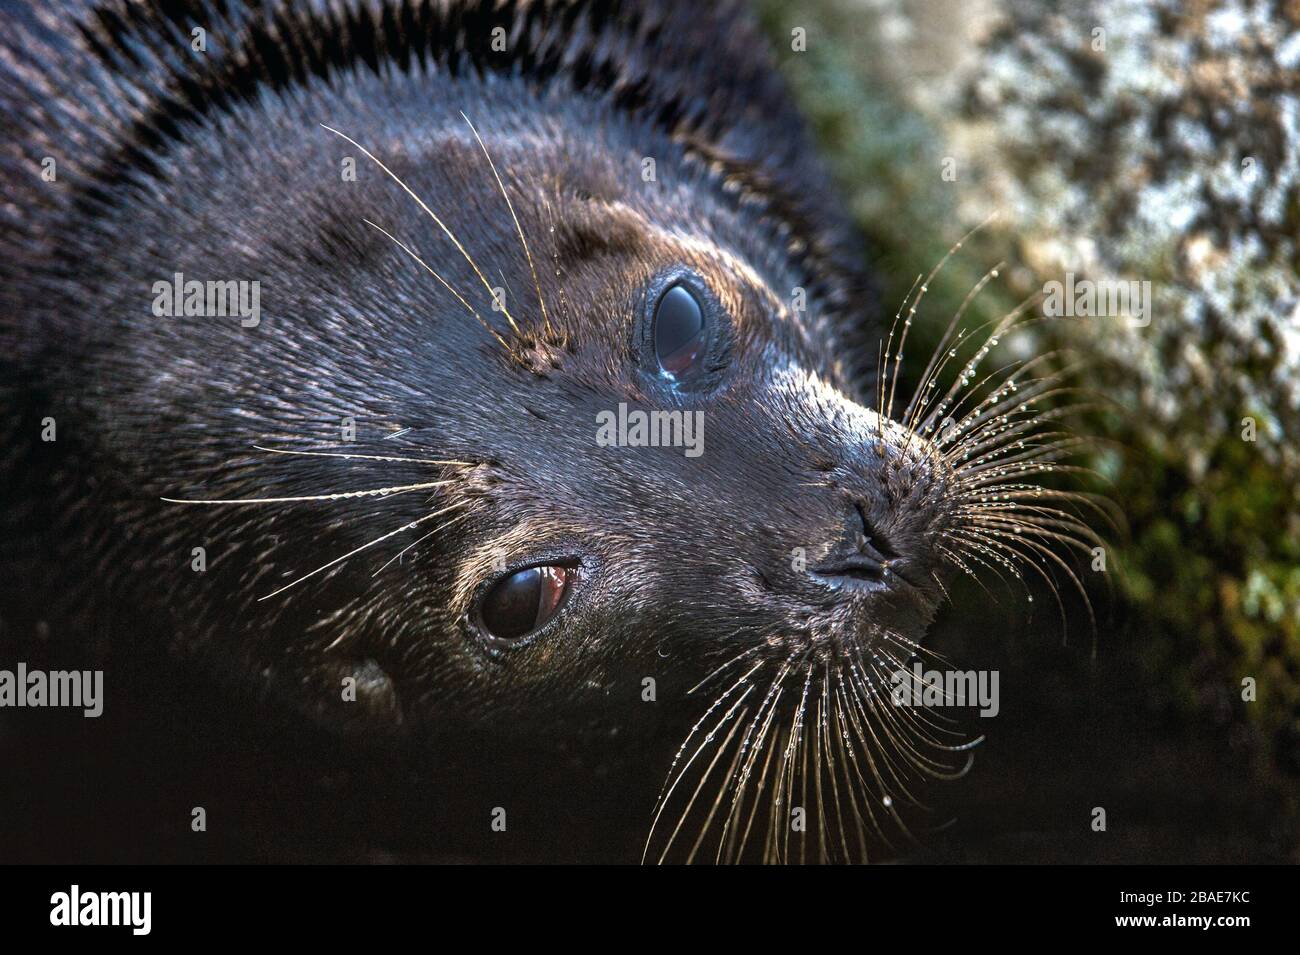 The Ladoga ringed seal.  Close up portrait. Scientific name: Pusa hispida ladogensis. The Ladoga seal in a natural habitat. Ladoga Lake. Russia Stock Photo